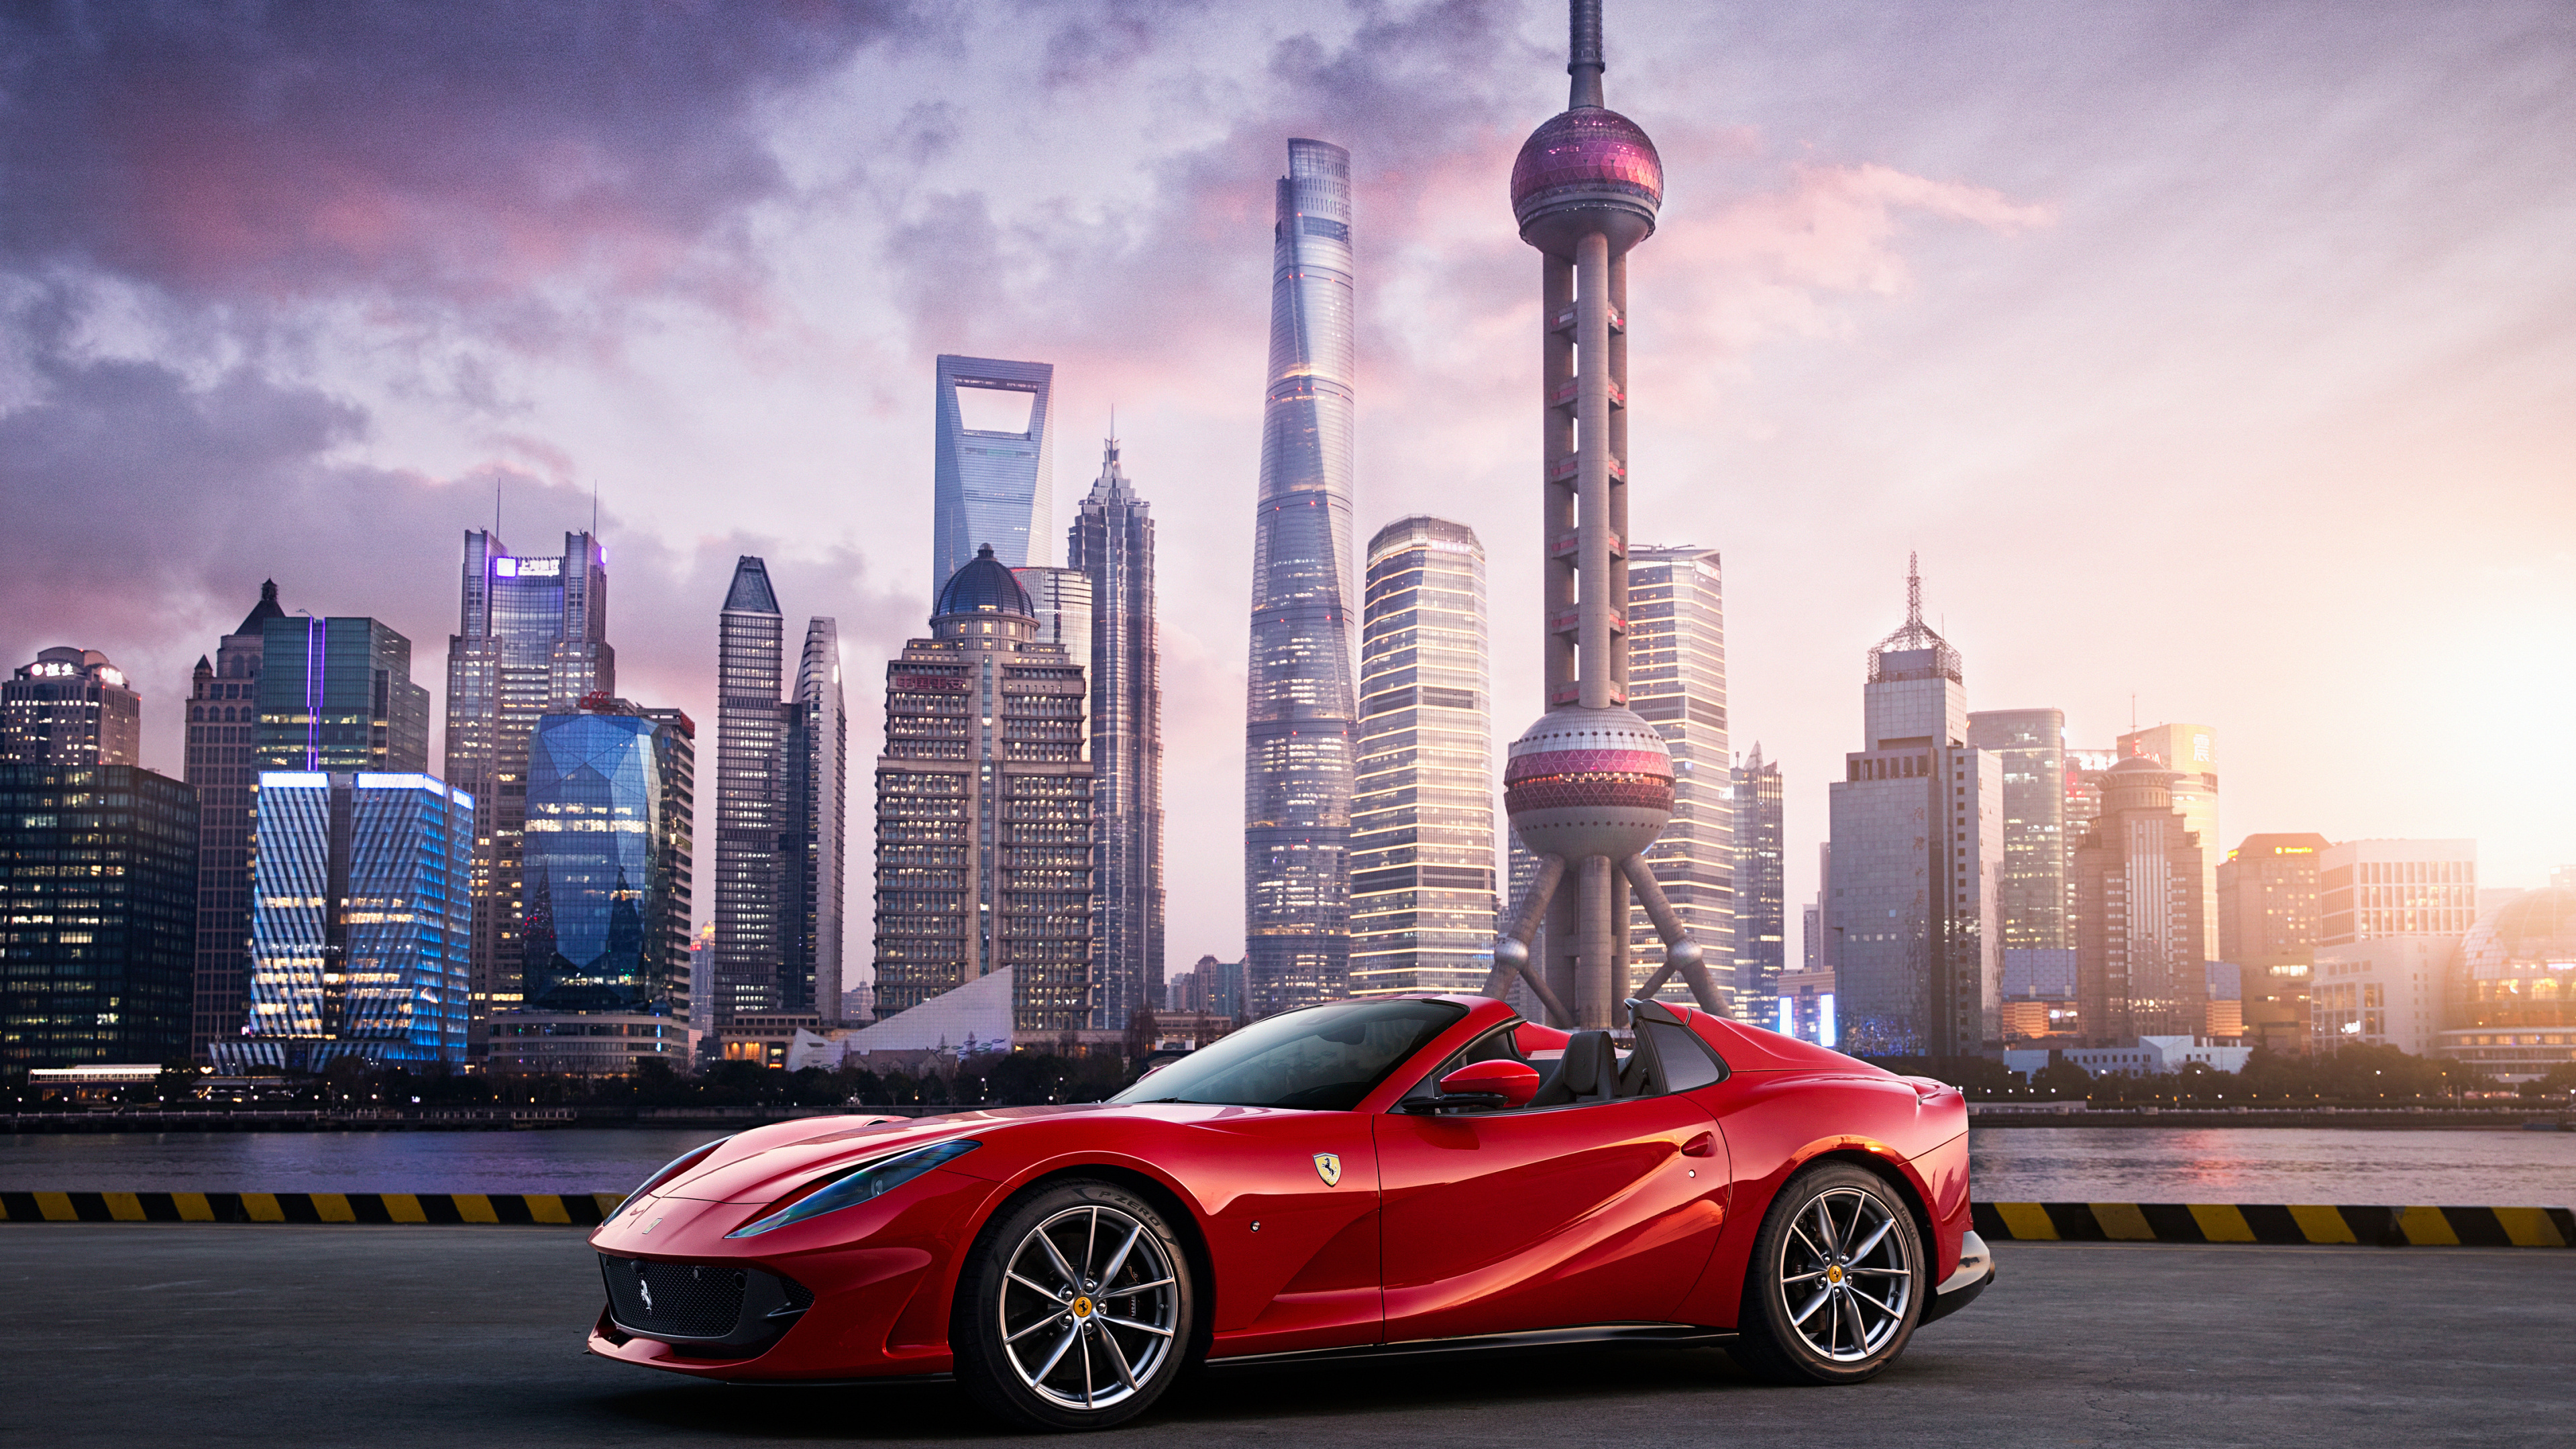 Ferrari 812 GTS, HD/4K wallpapers, High quality images, Automotive, 3840x2160 4K Desktop